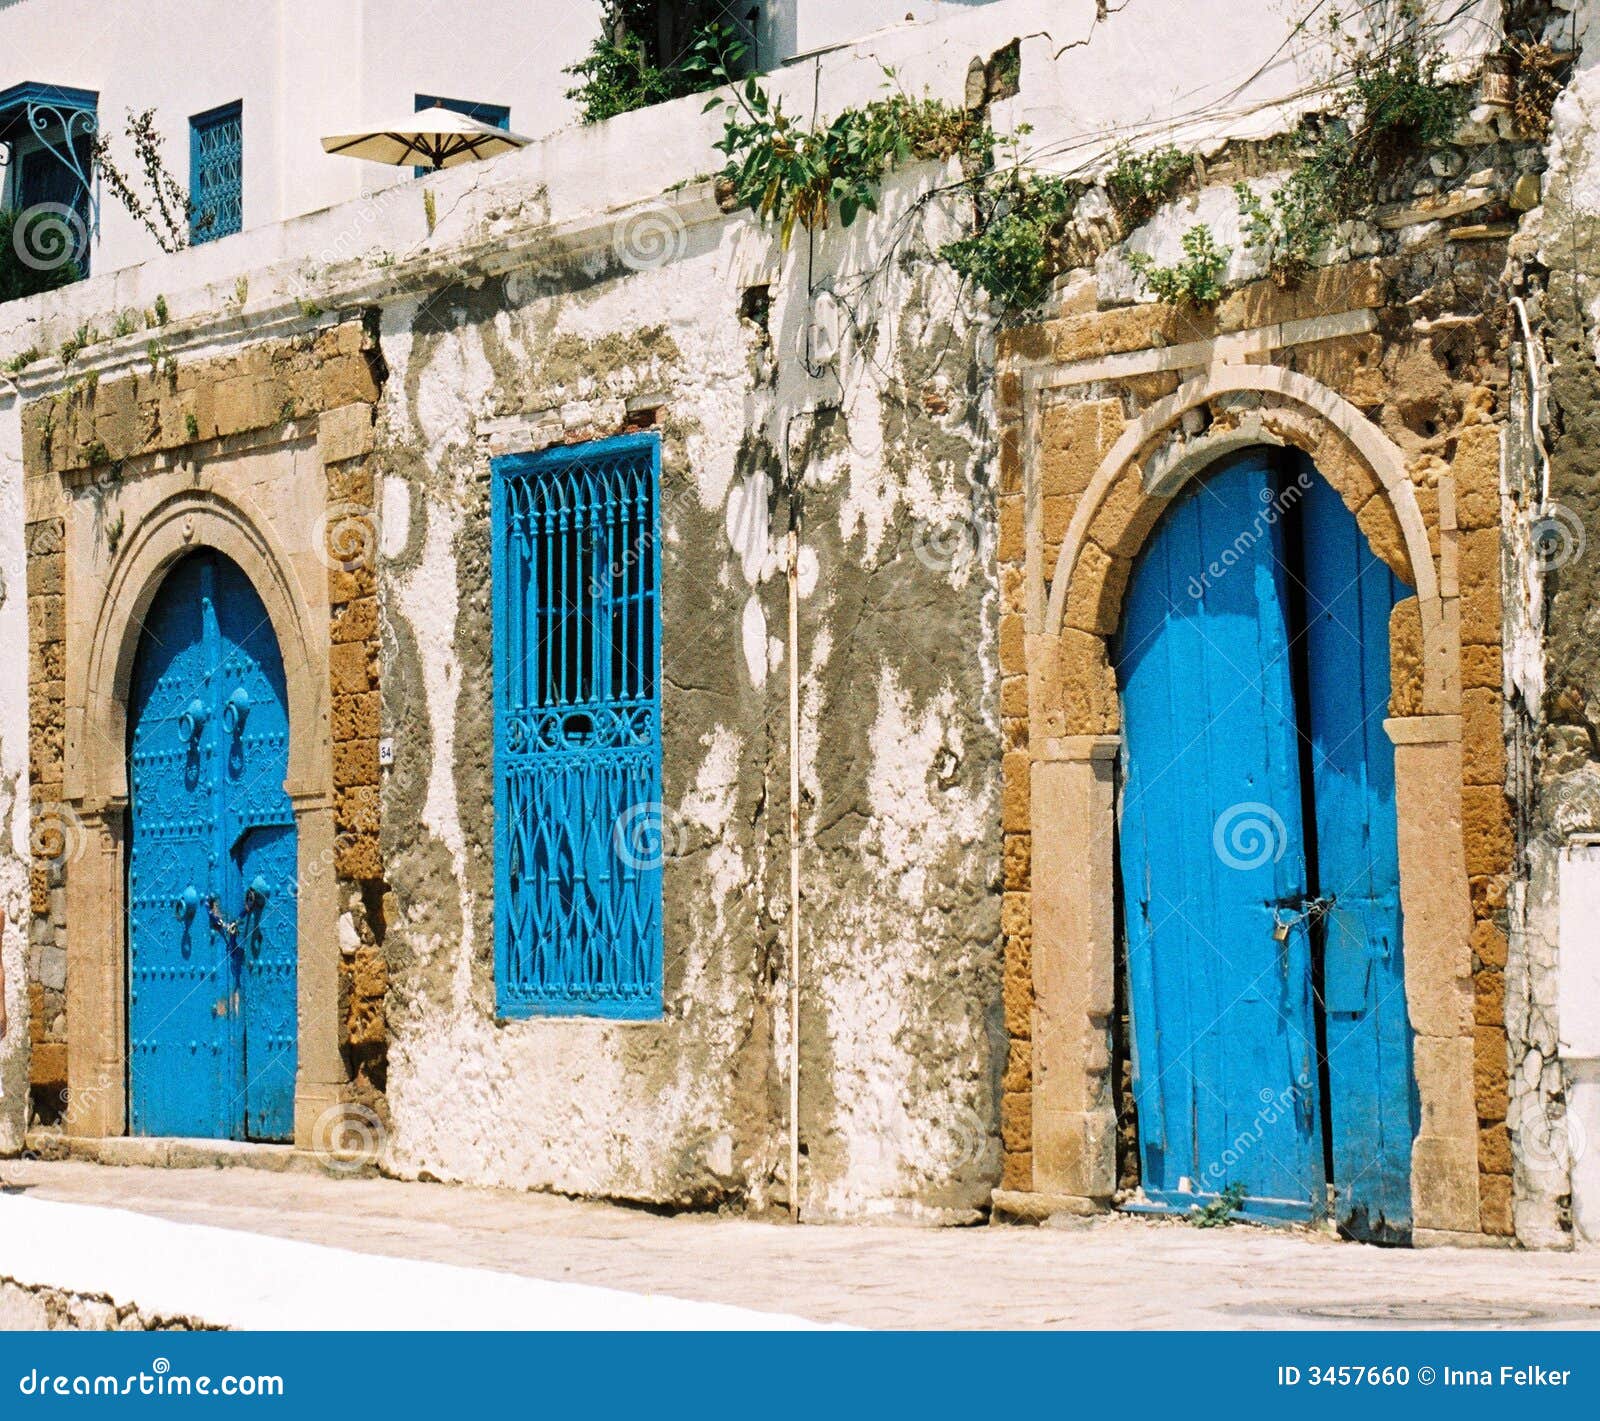 blue-doors-tunisia-3457660.jpg